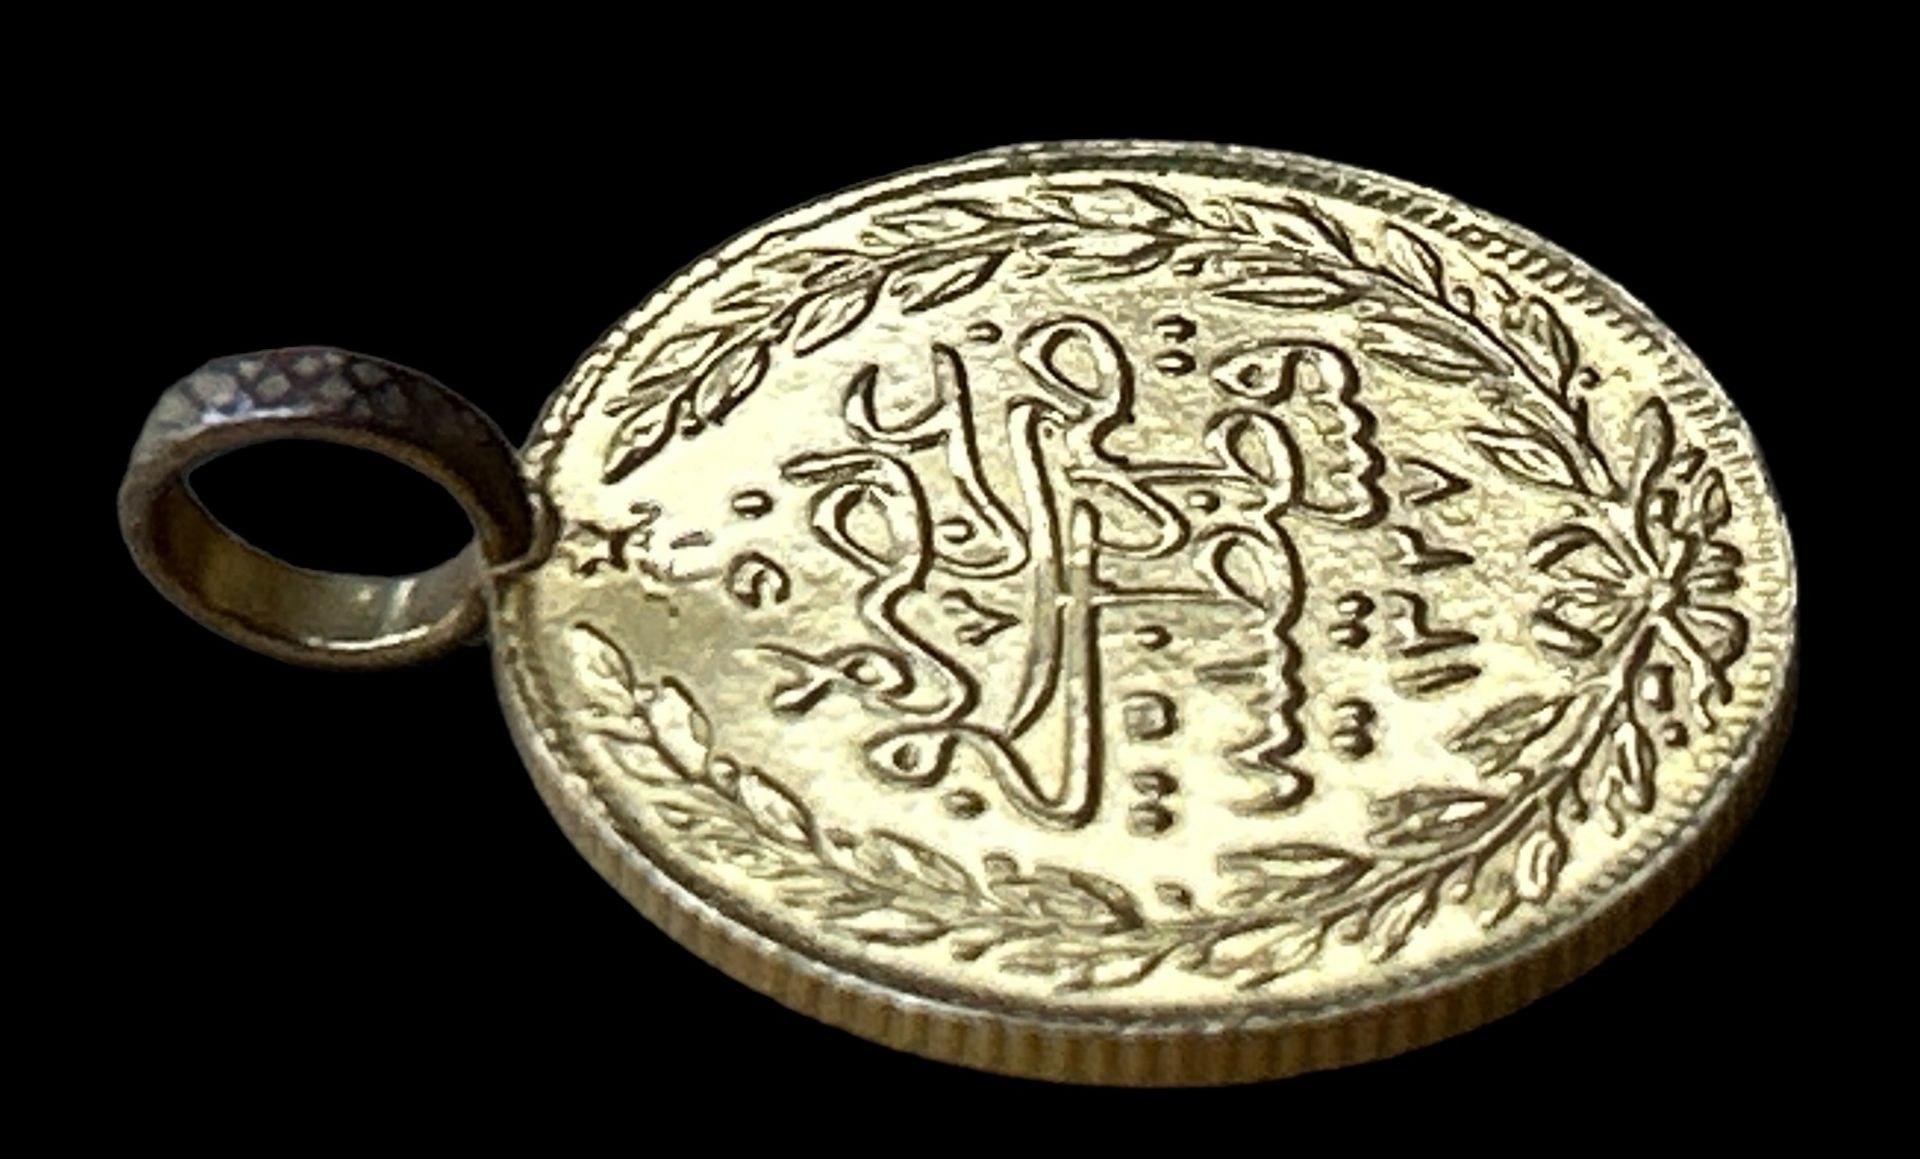 Münzanhänger Gold-916-, 100 Piaster, Türkei, gehenkelt, Öse unechtes Material, zus. 7,4 gr. D-ca. 2 - Image 5 of 5